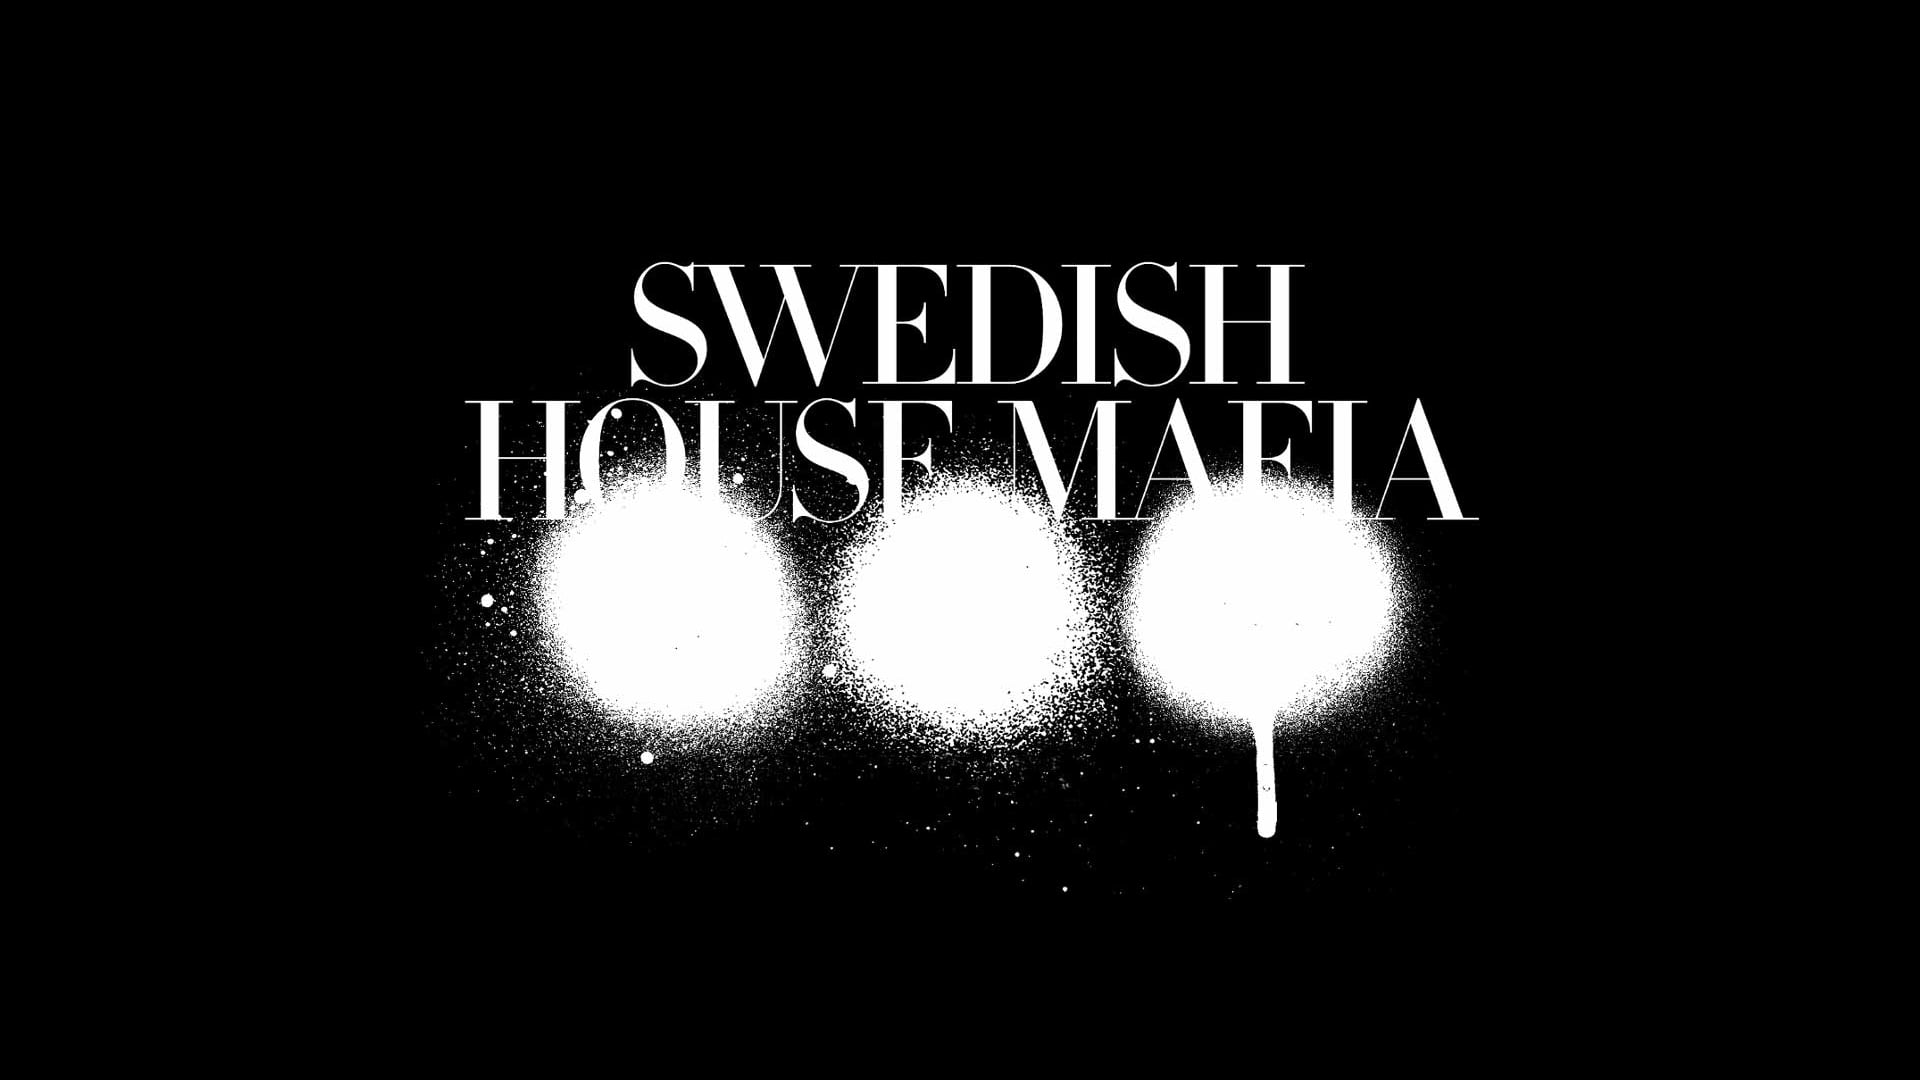 Swedish House Mafia digital wallpaper, Swedish House Mafia, Swedish, house music, typography